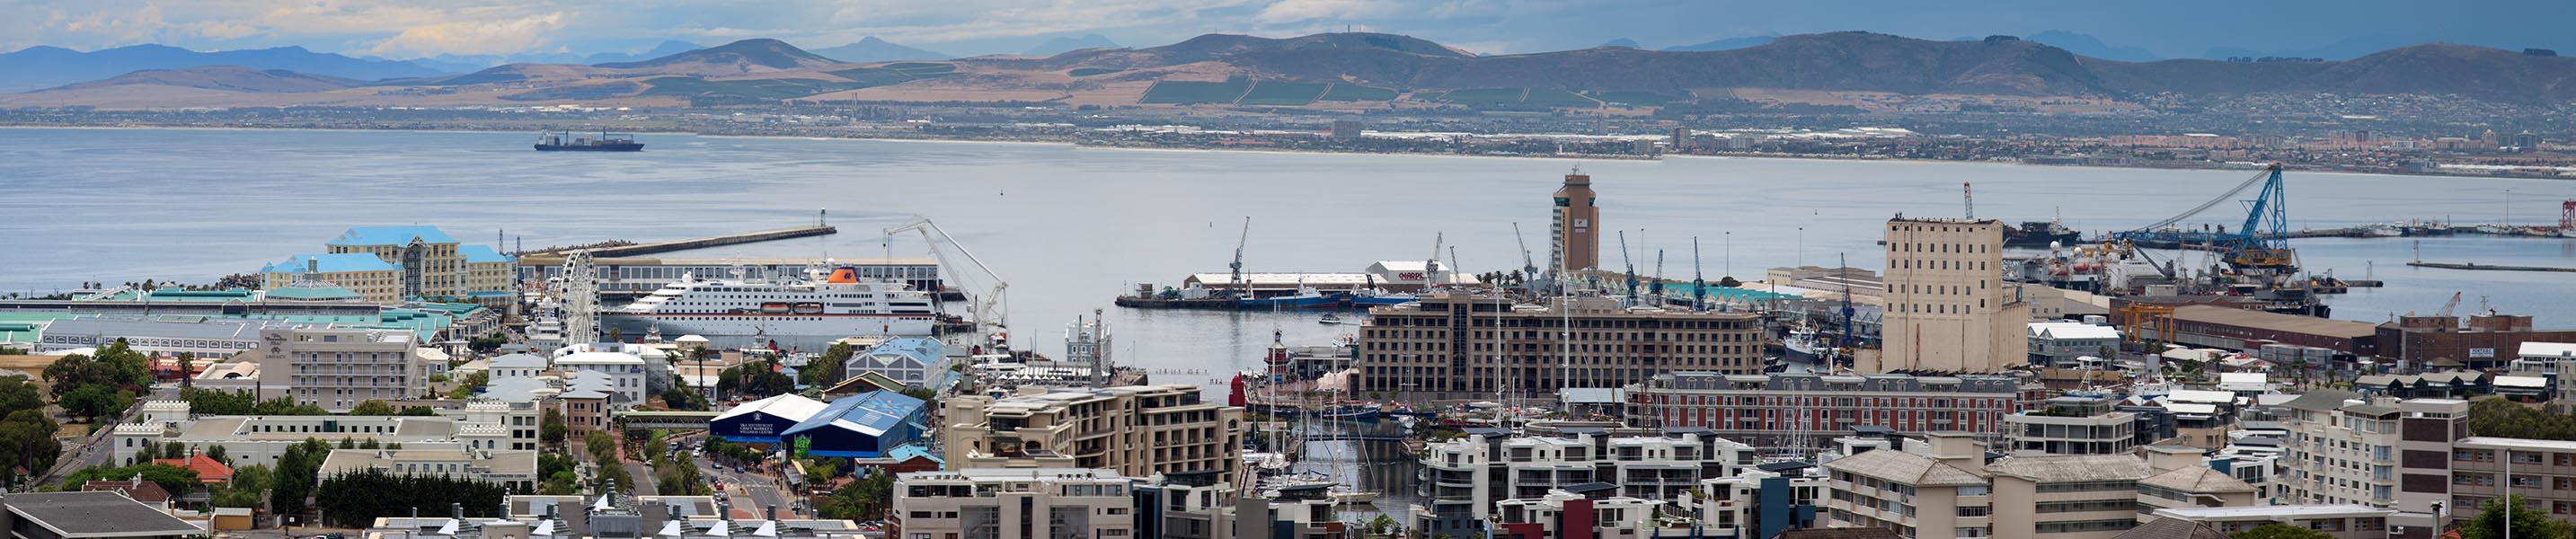 Waterfront | Kaapstad, Panorama